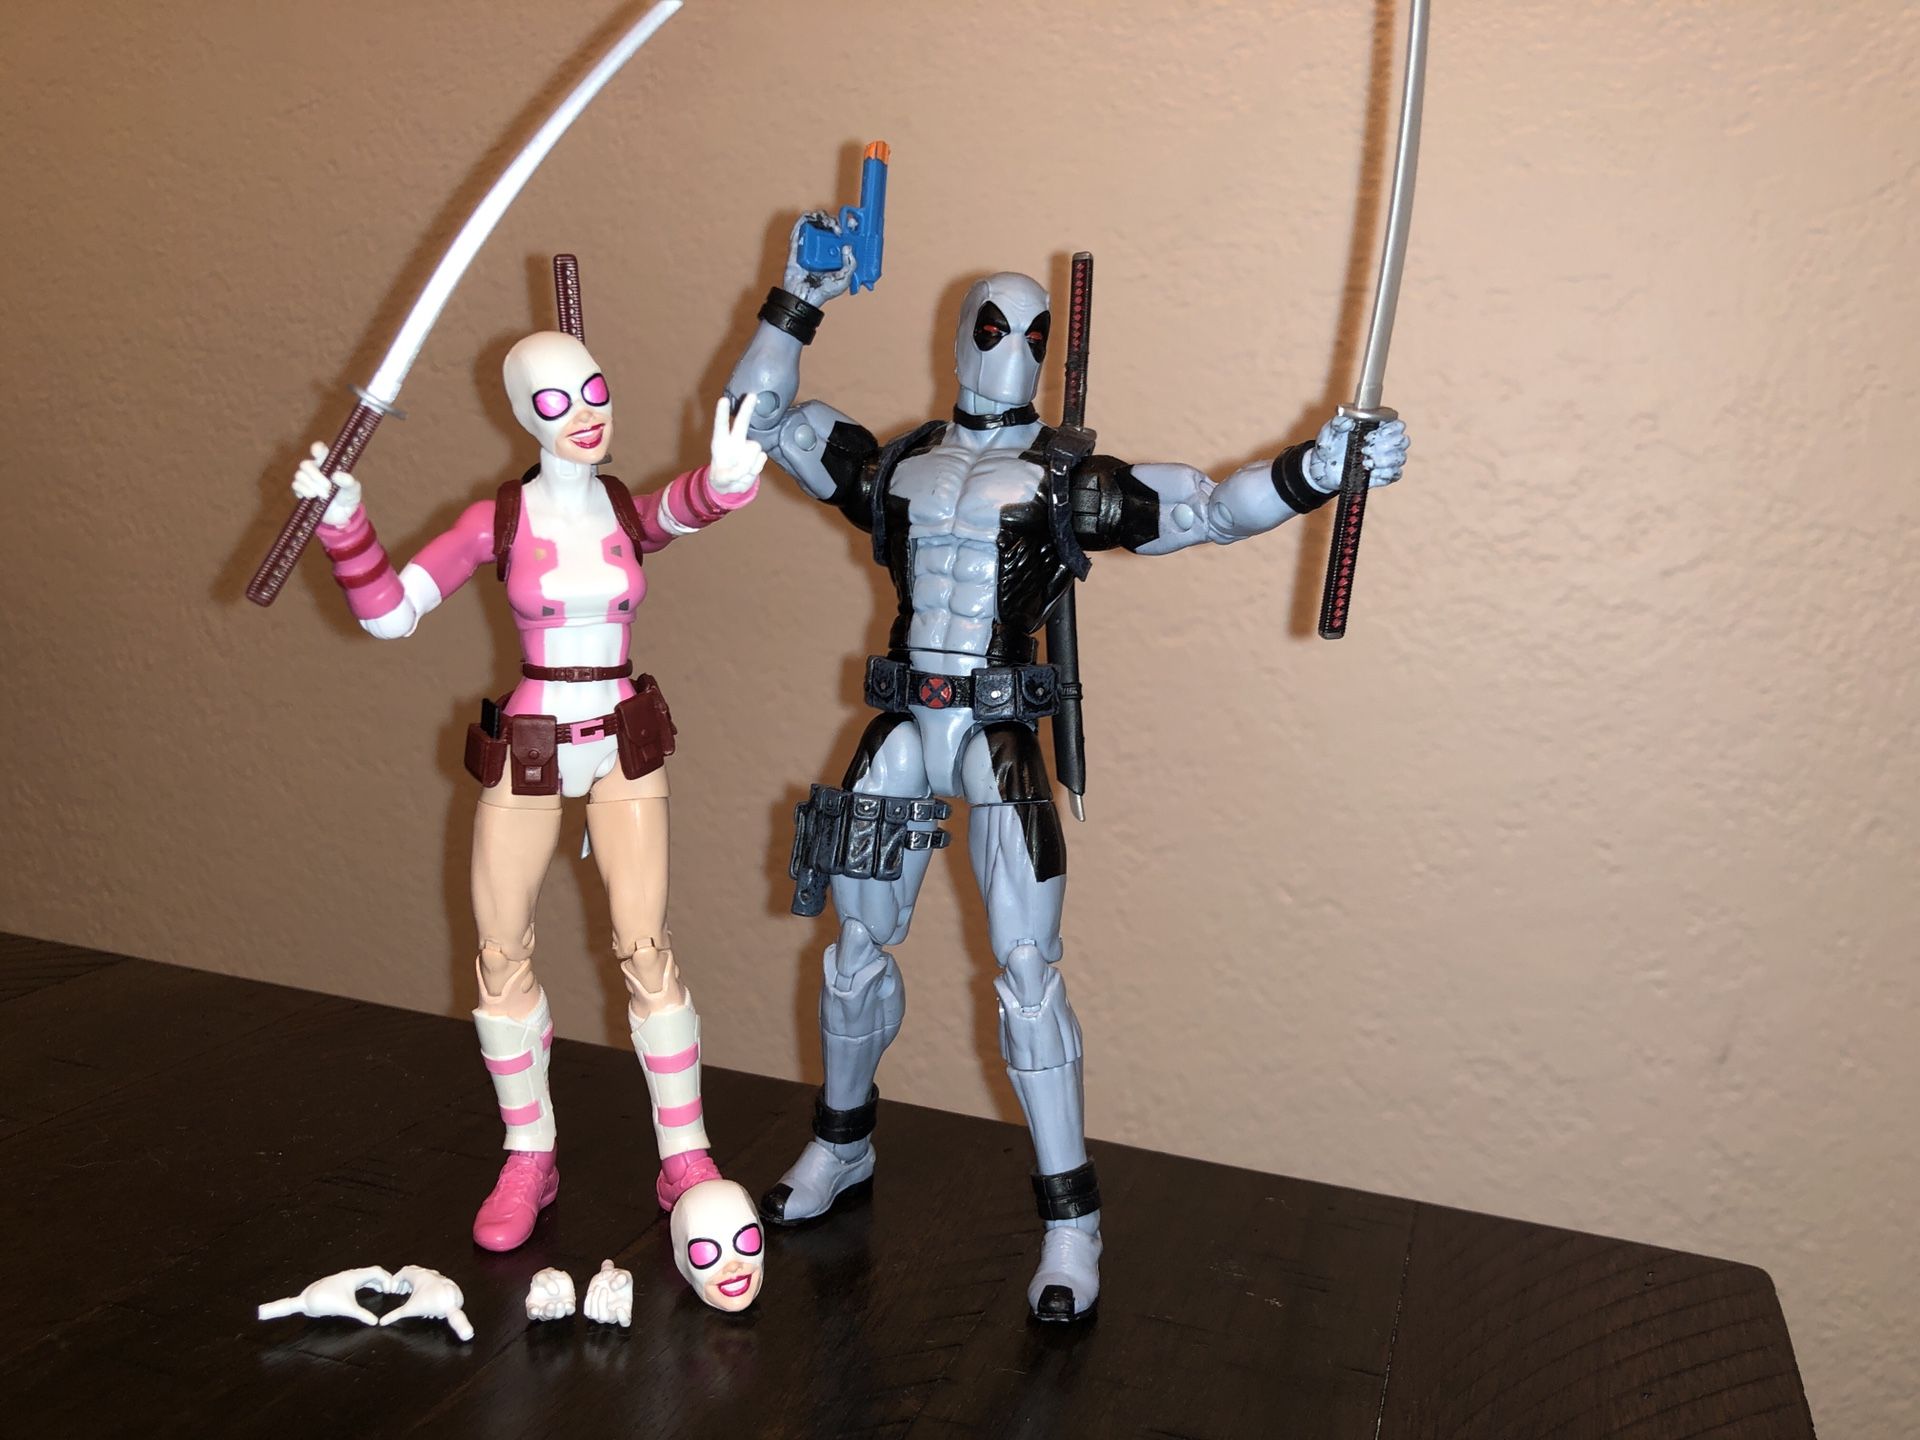 Marvel Legends Deadpool and Gwenpool Figures